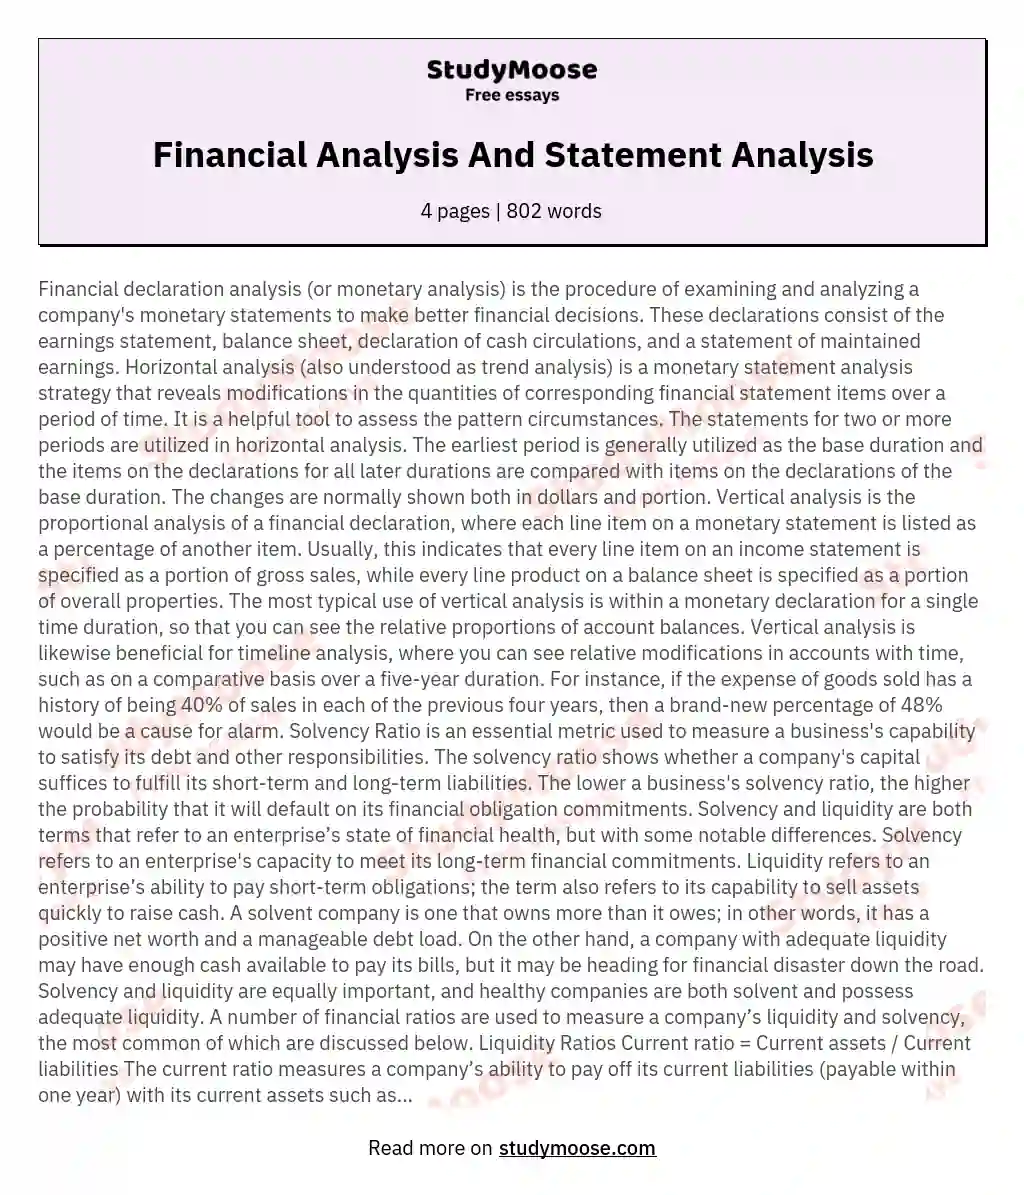 Financial Analysis And Statement Analysis